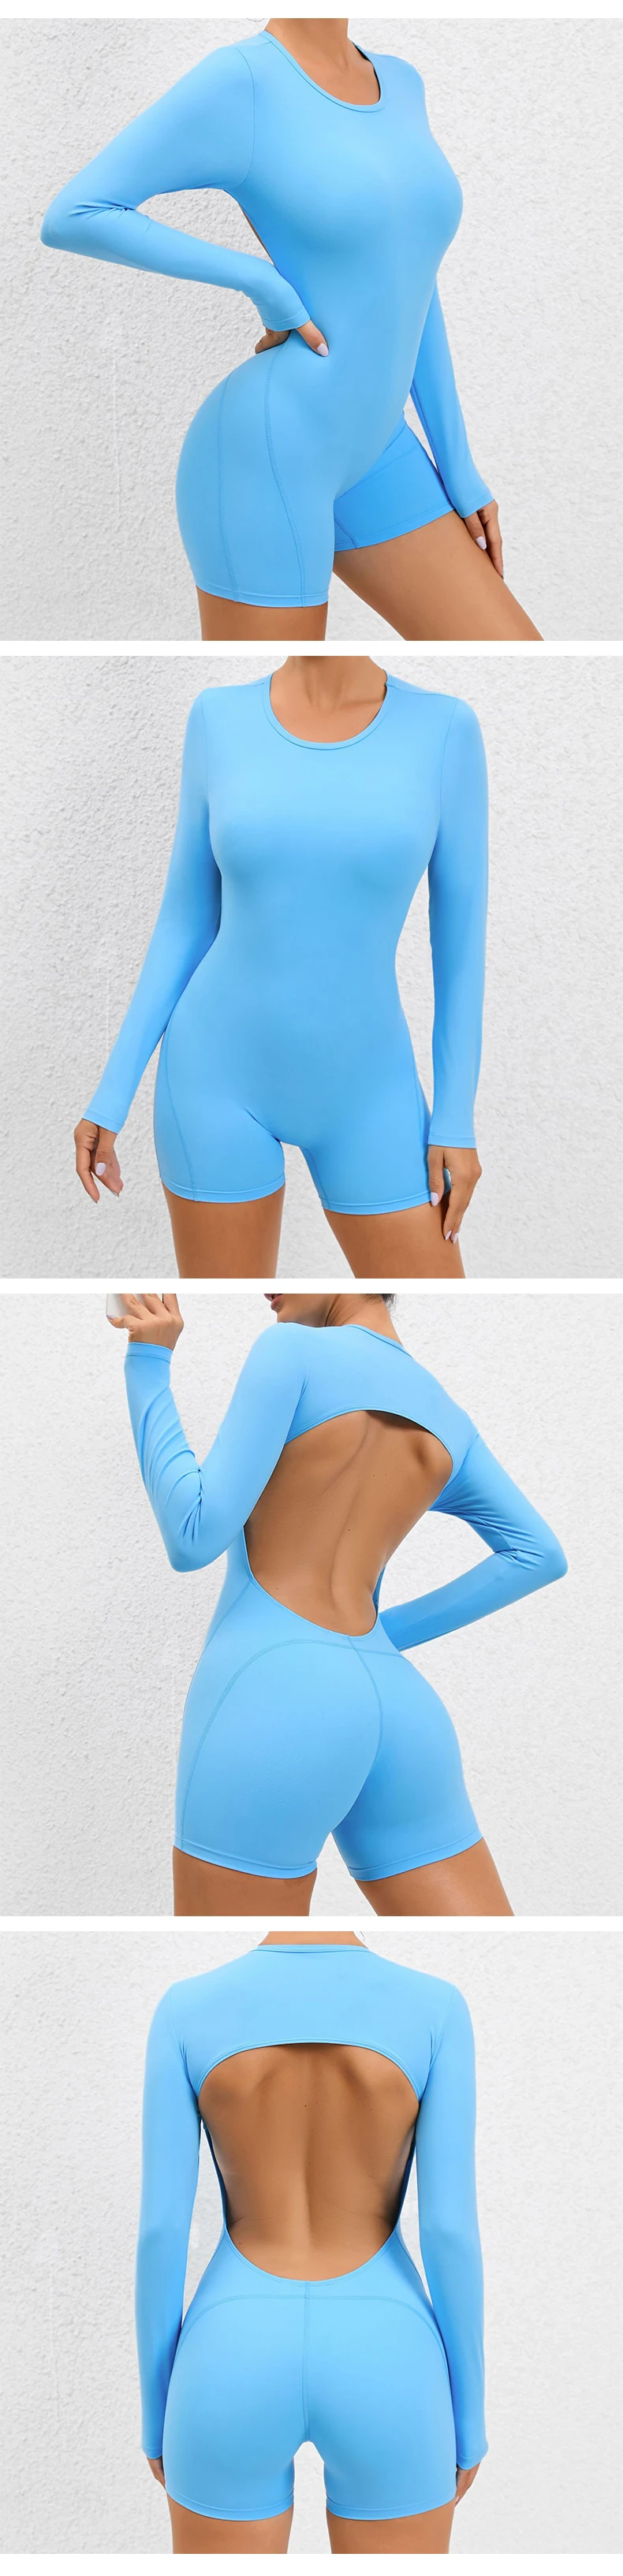 Dv509 Women's Fitness Bodysuit Fashionable Solid Nylon Yoga Romper ...